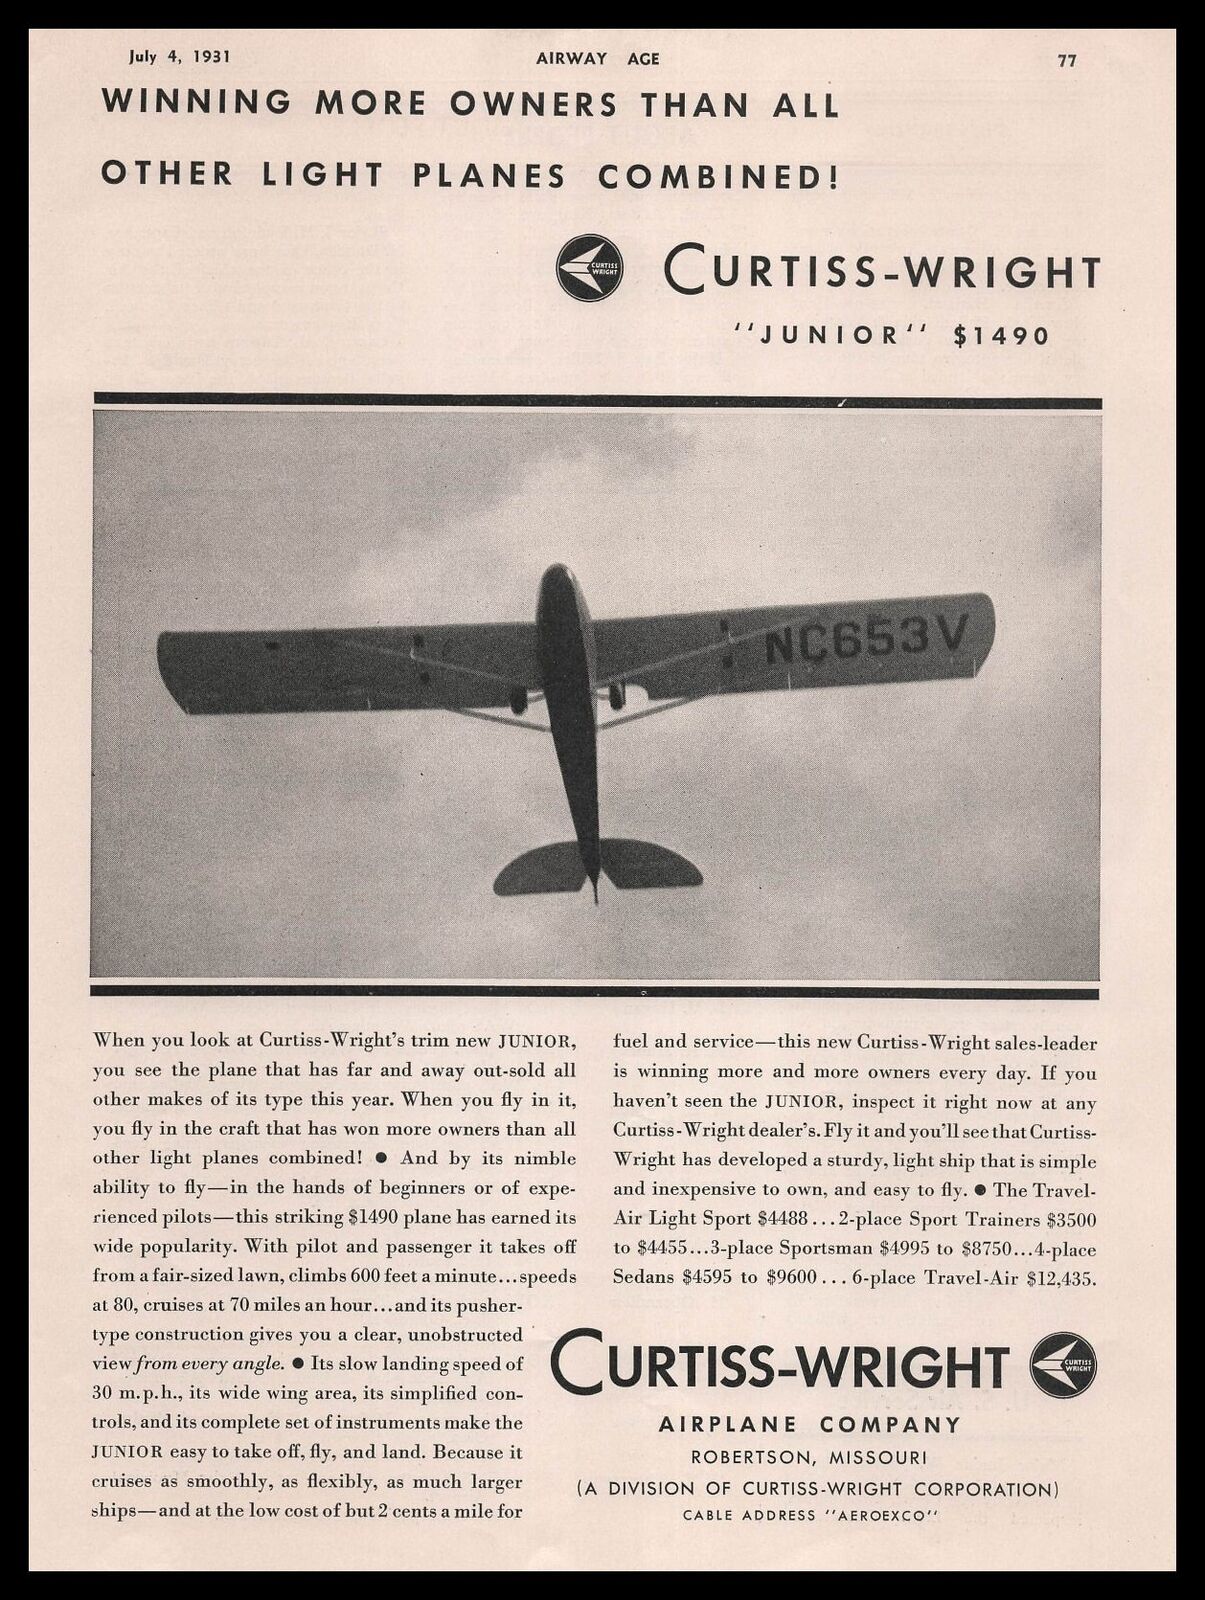 1931 Curtiss Wright Airplane Co. Robertson Missouri Photo Junior Plane Print Ad